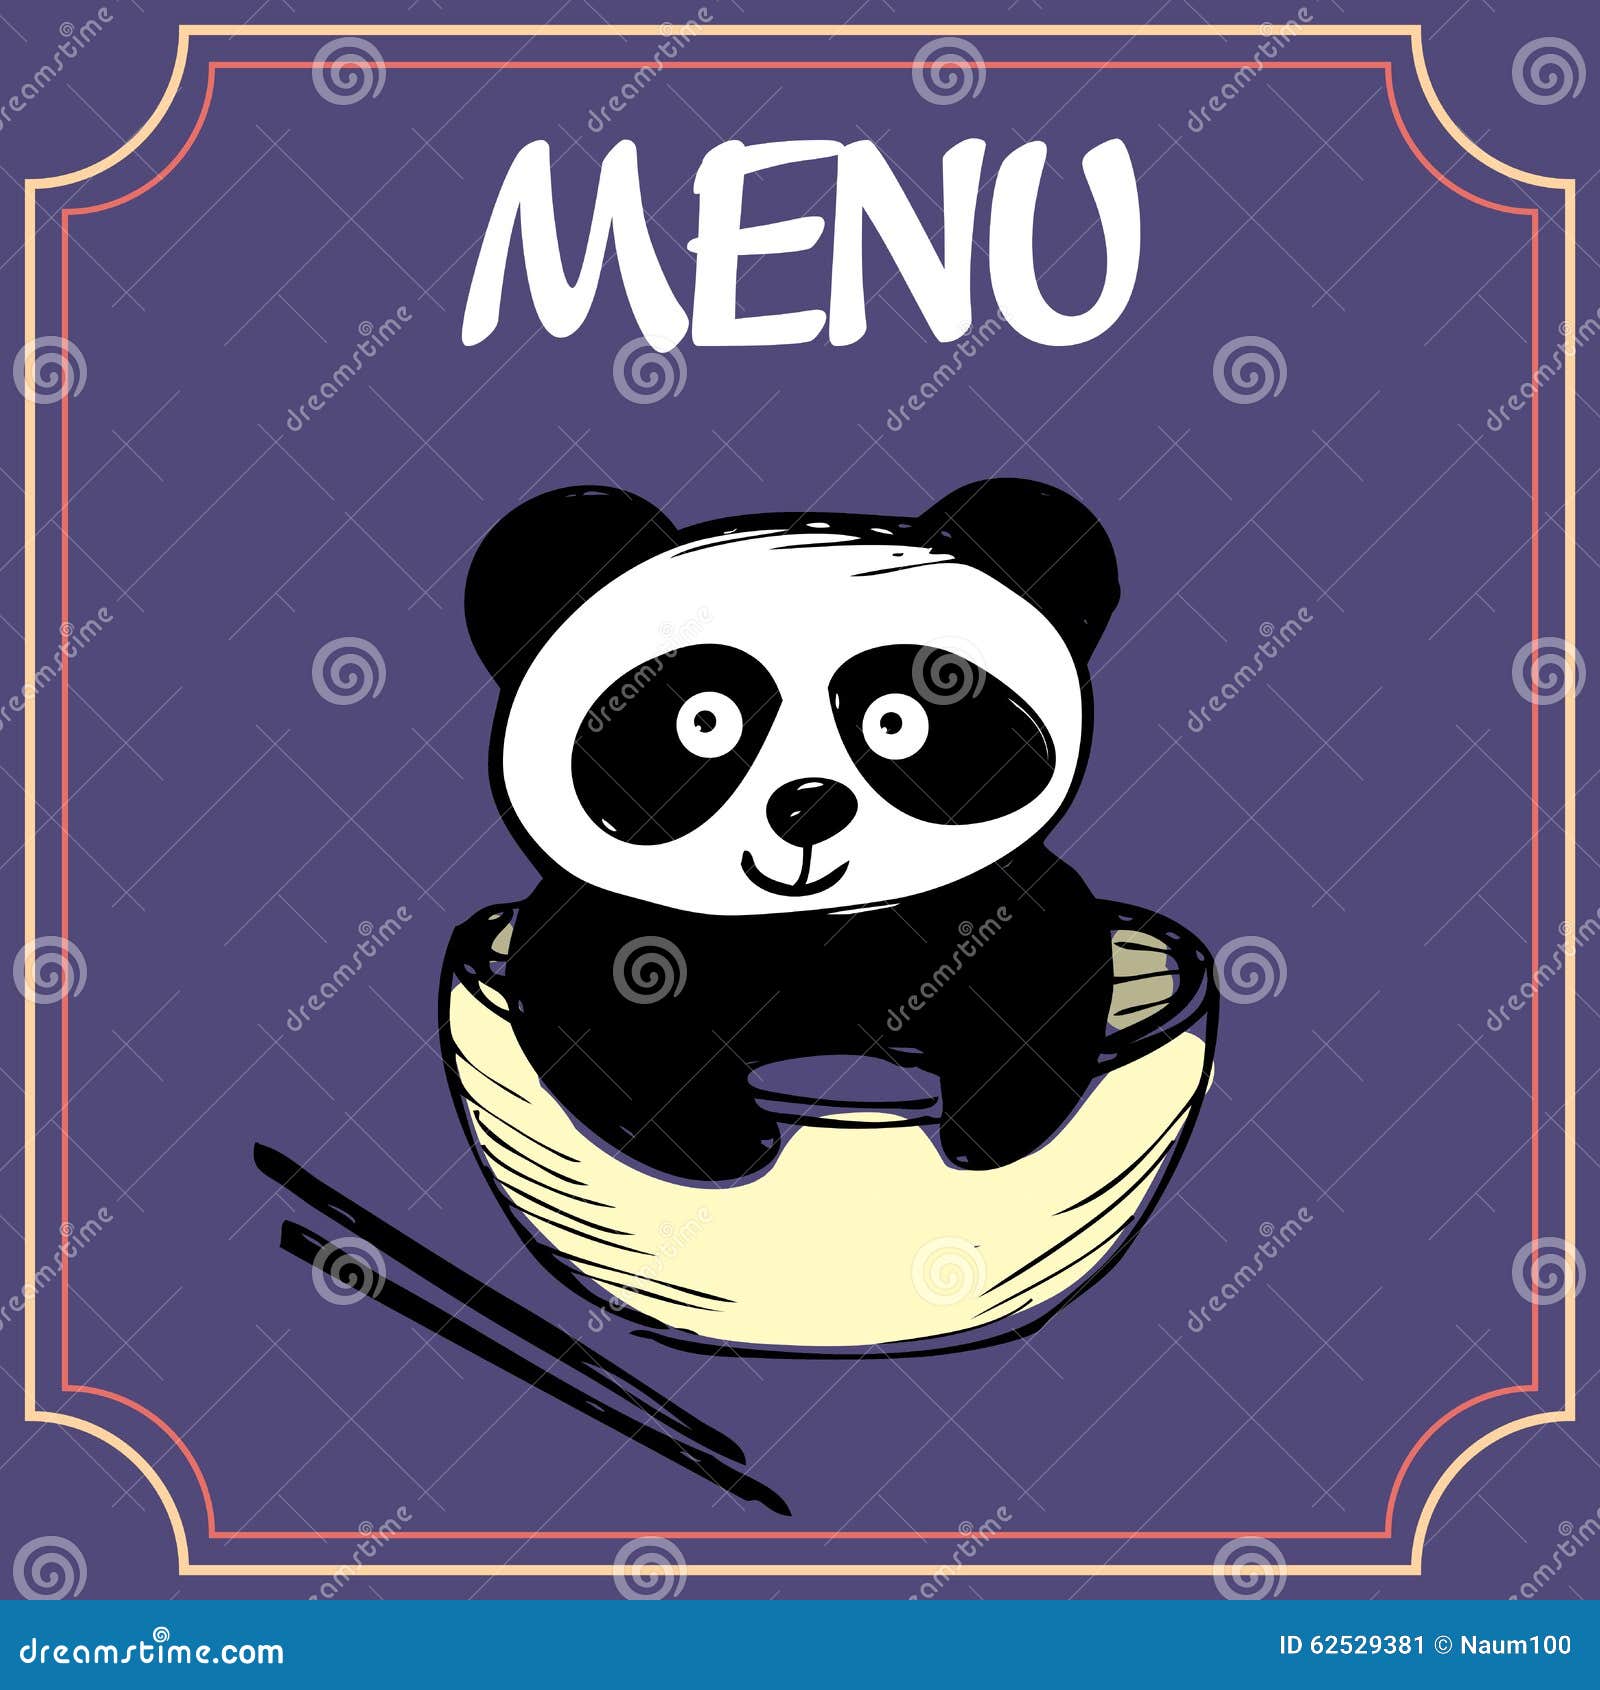 clipart panda banner - photo #26